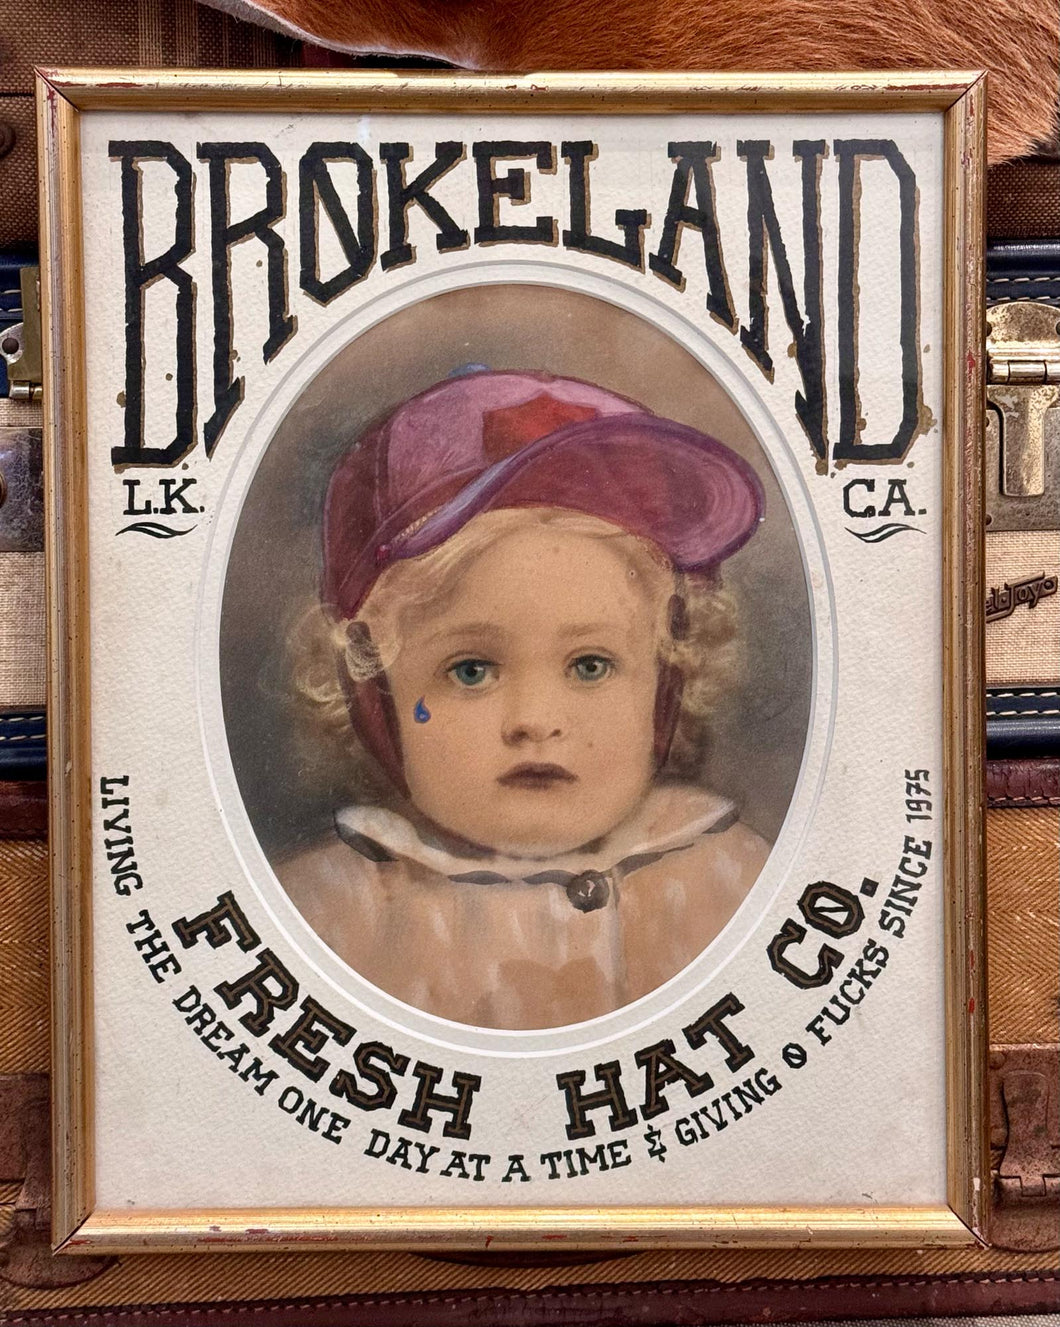 Brokeland Fresh Hat Co. Advertising for Dummies